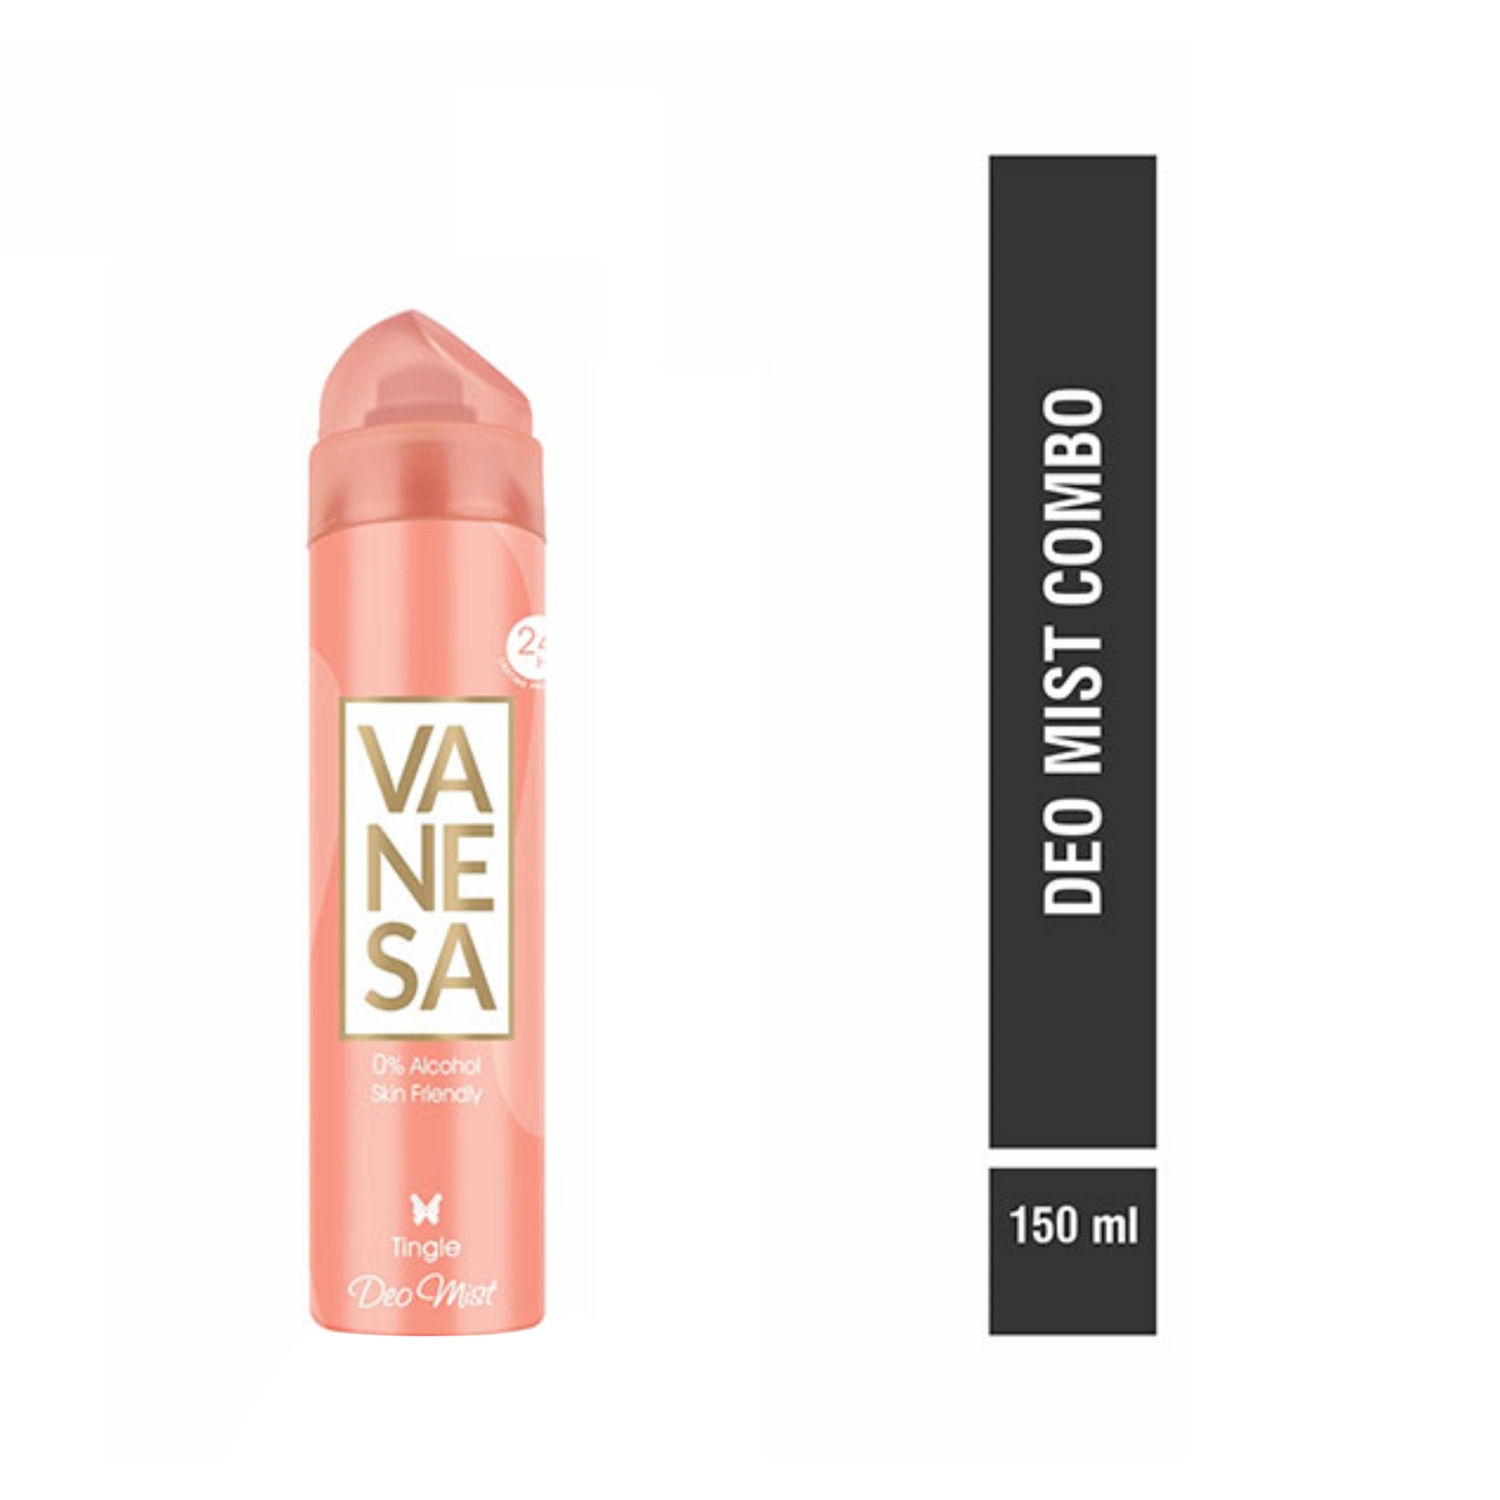 Vanesa | Vanesa Tingle Deodorant Body Spray (150ml)